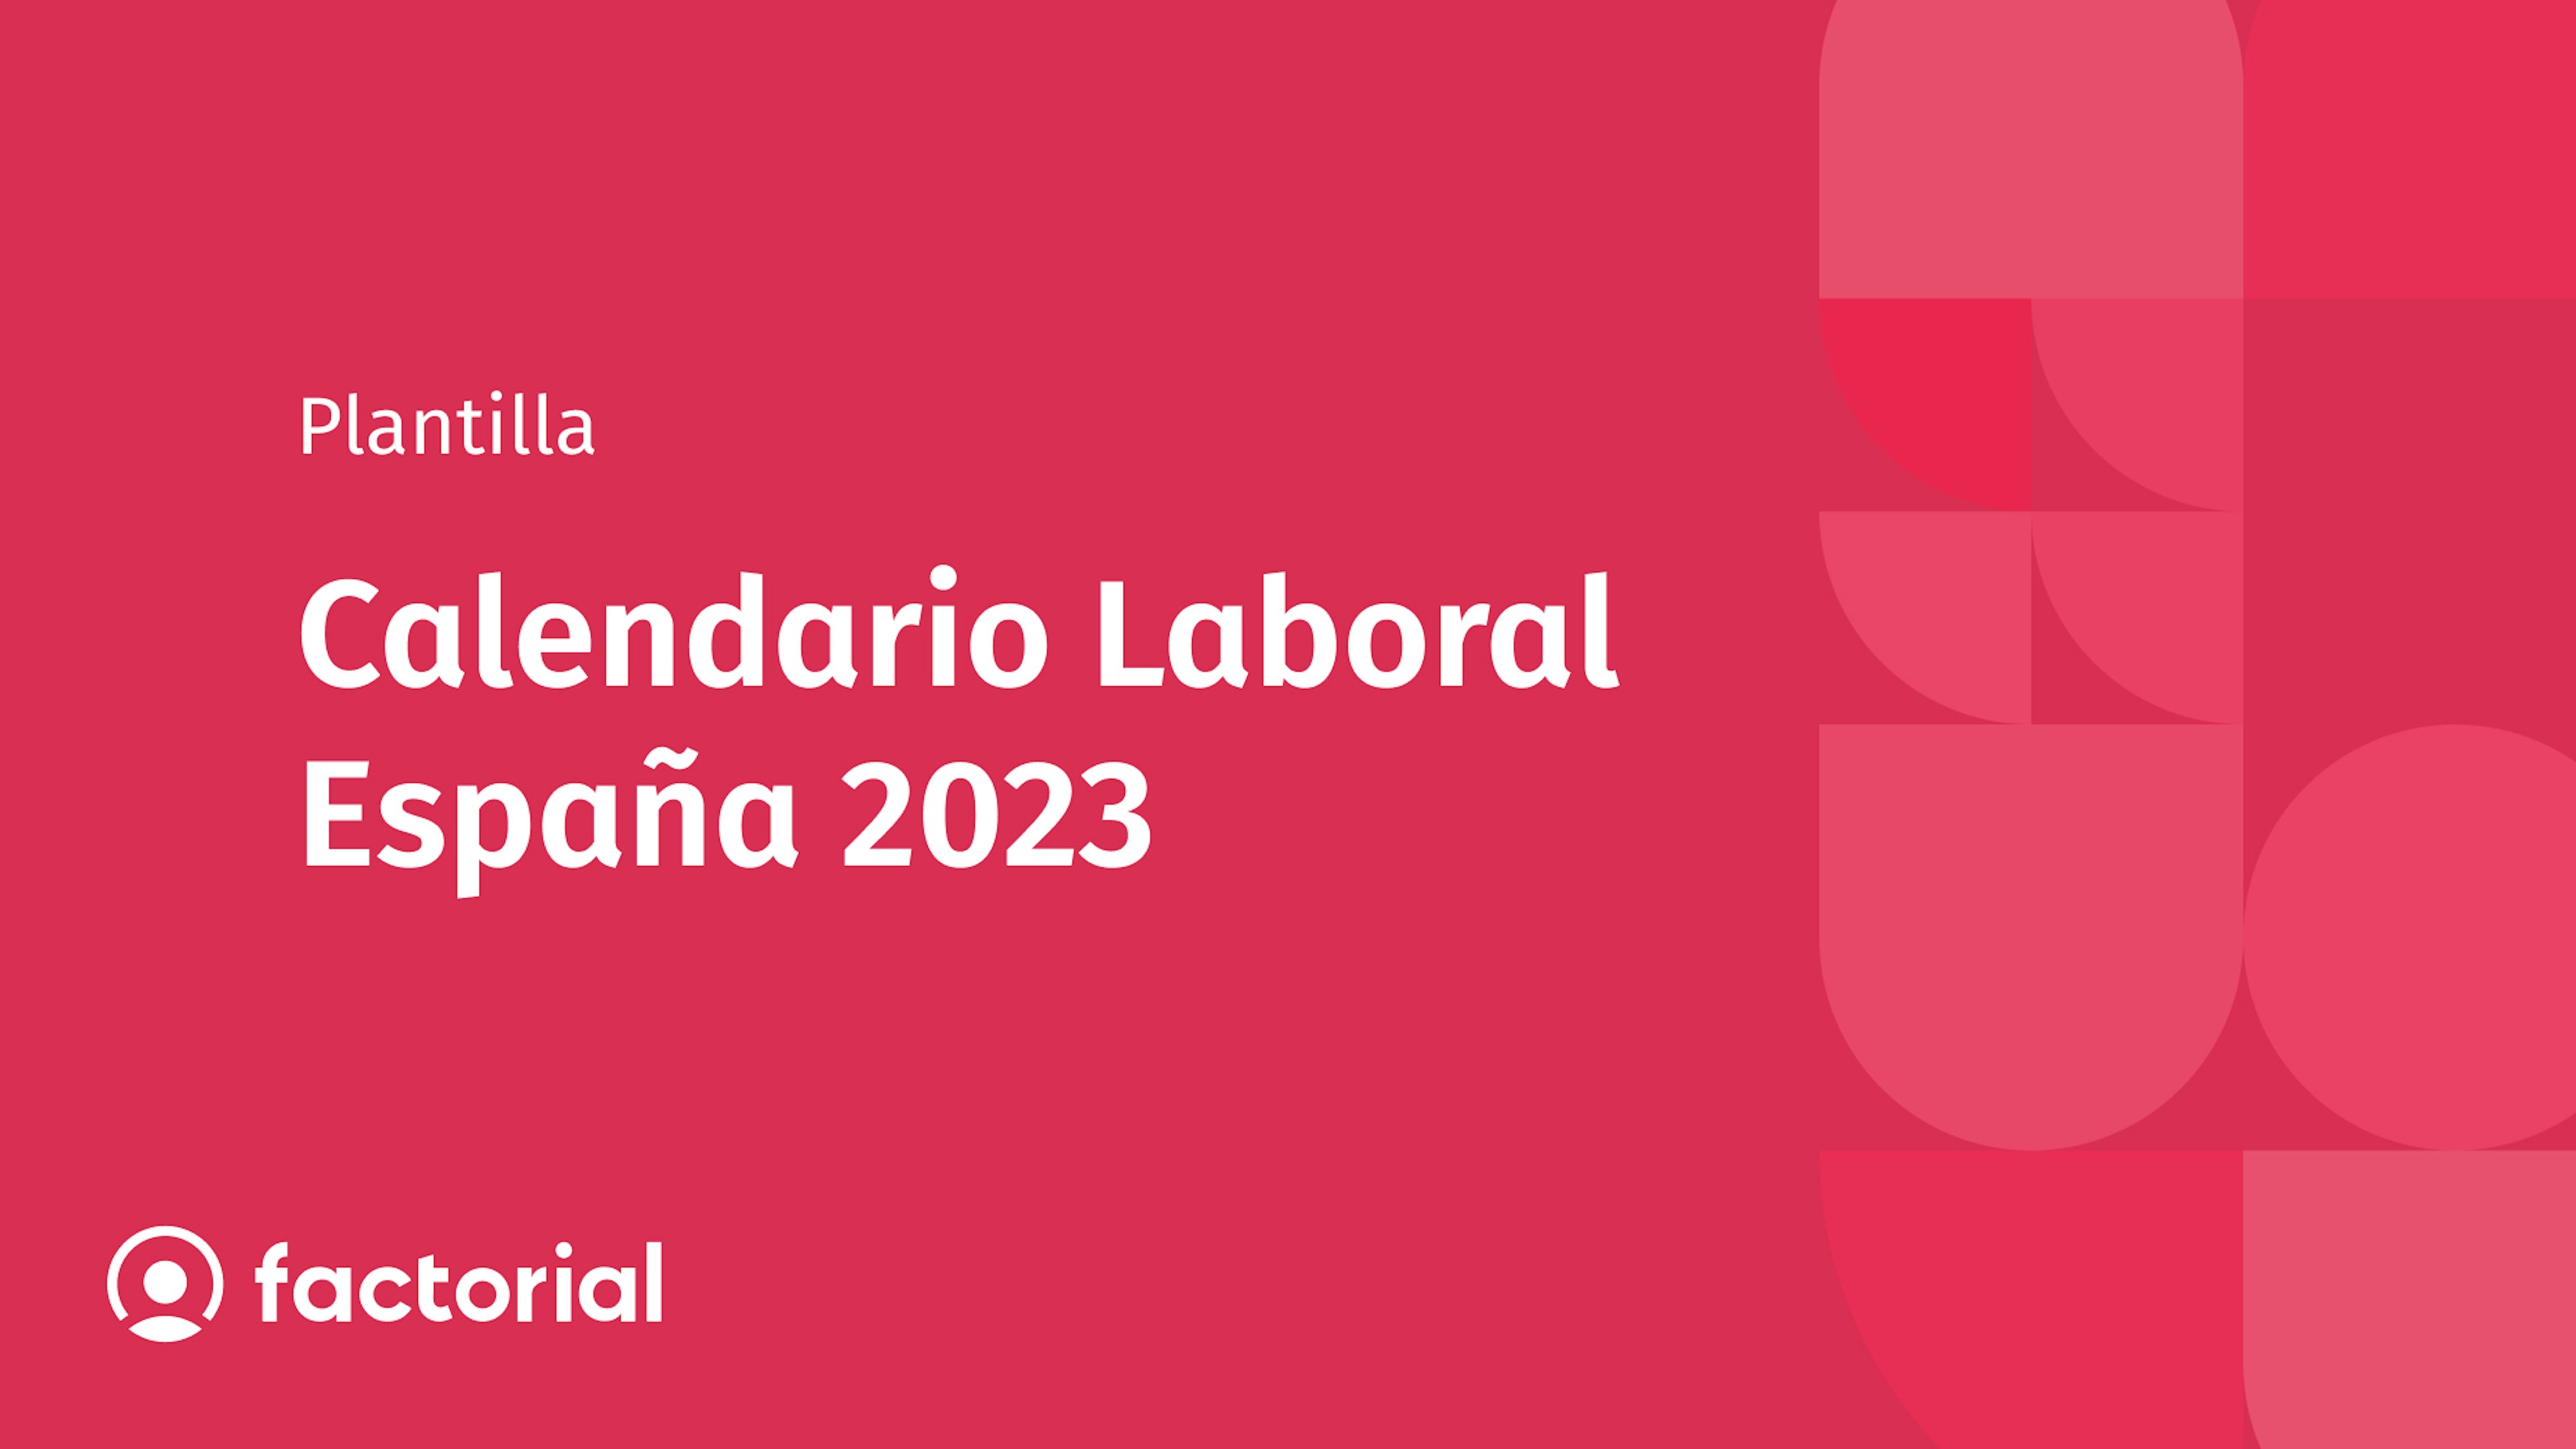 calendario laboral espana 2023 plantilla